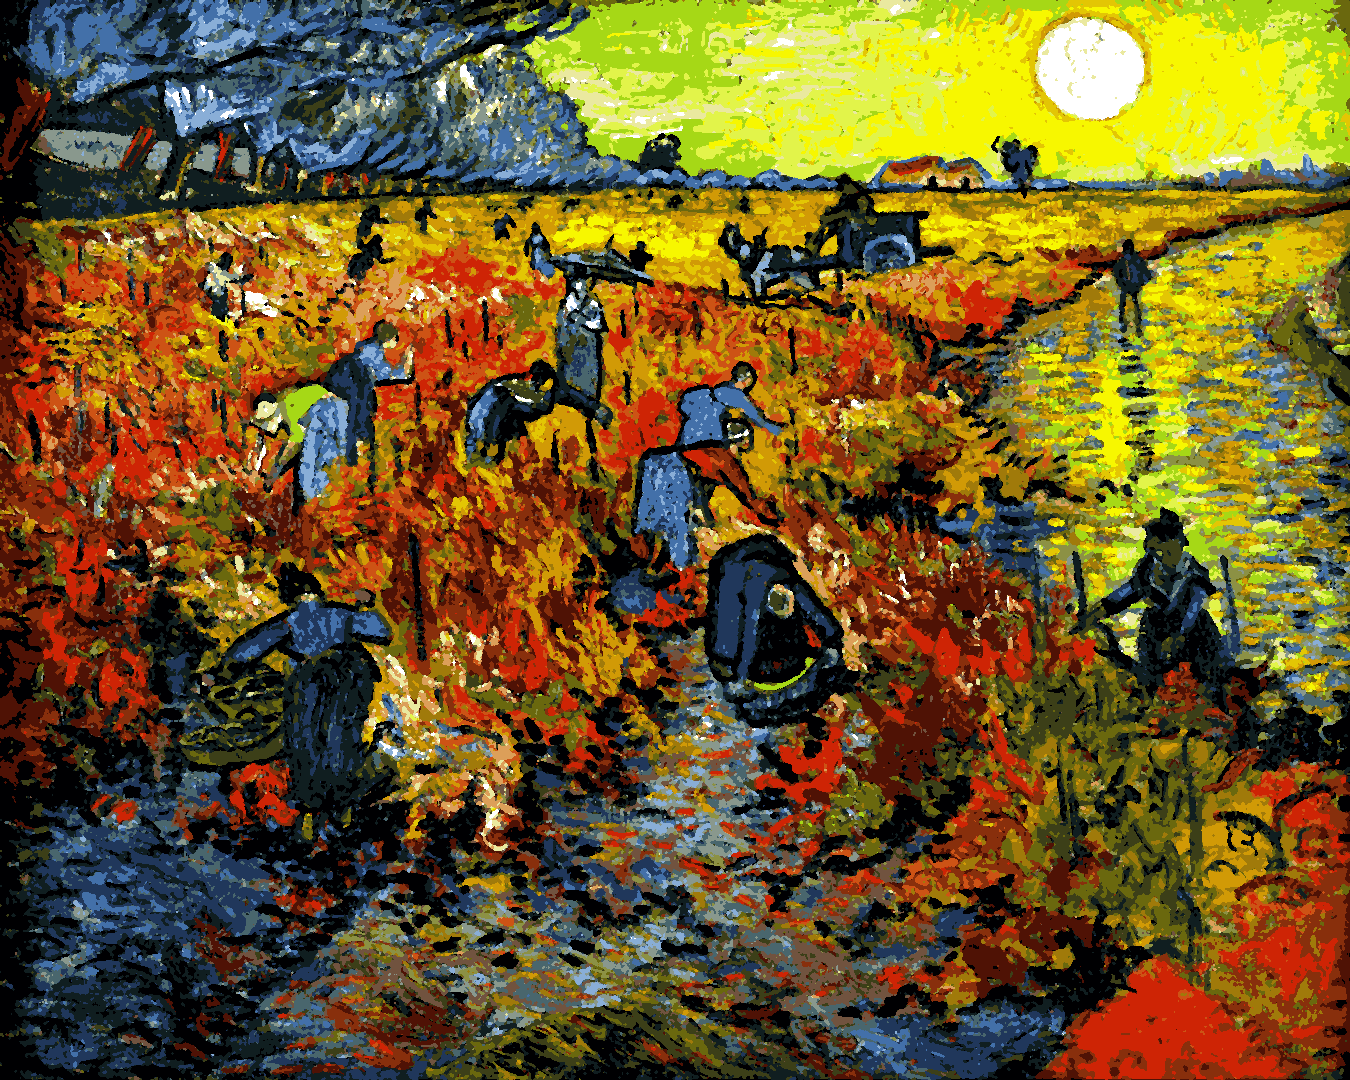 Vincent Van Gogh PD - (155) - The Red Vineyard - Van-Go Paint-By-Number Kit